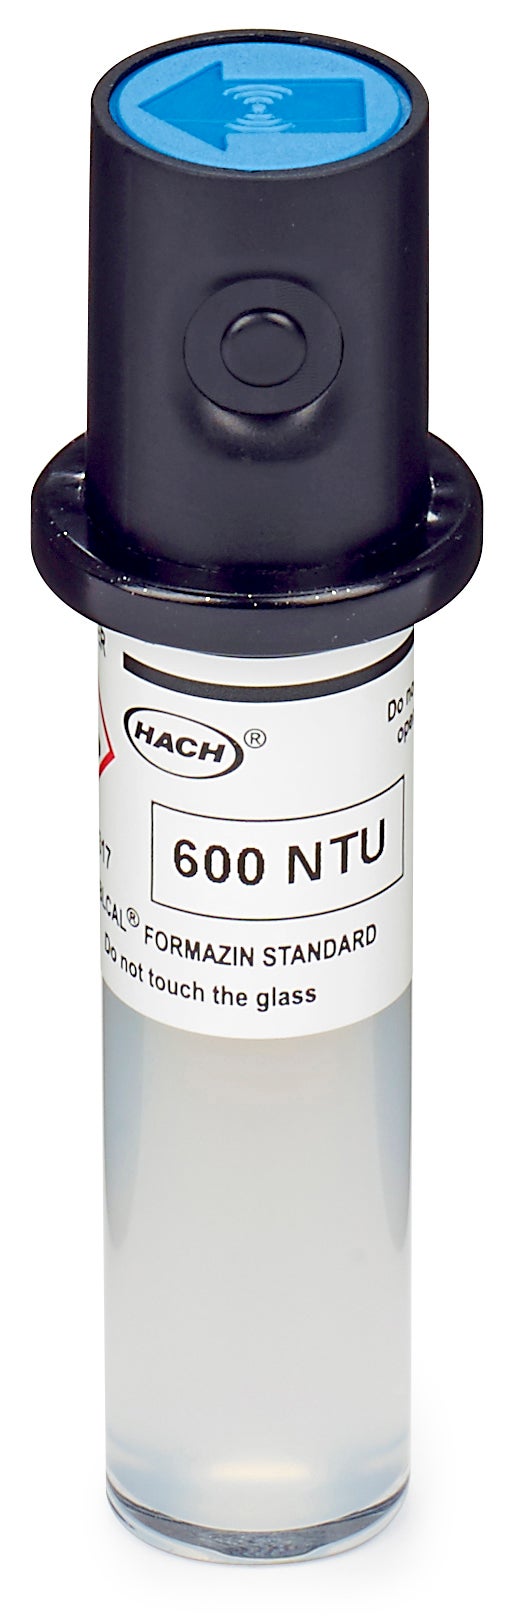 Stablcal Calibration Vial, 600 NTU, with RFID for TU5200, TU5300sc, and TU5400sc Laser Turbidimeters